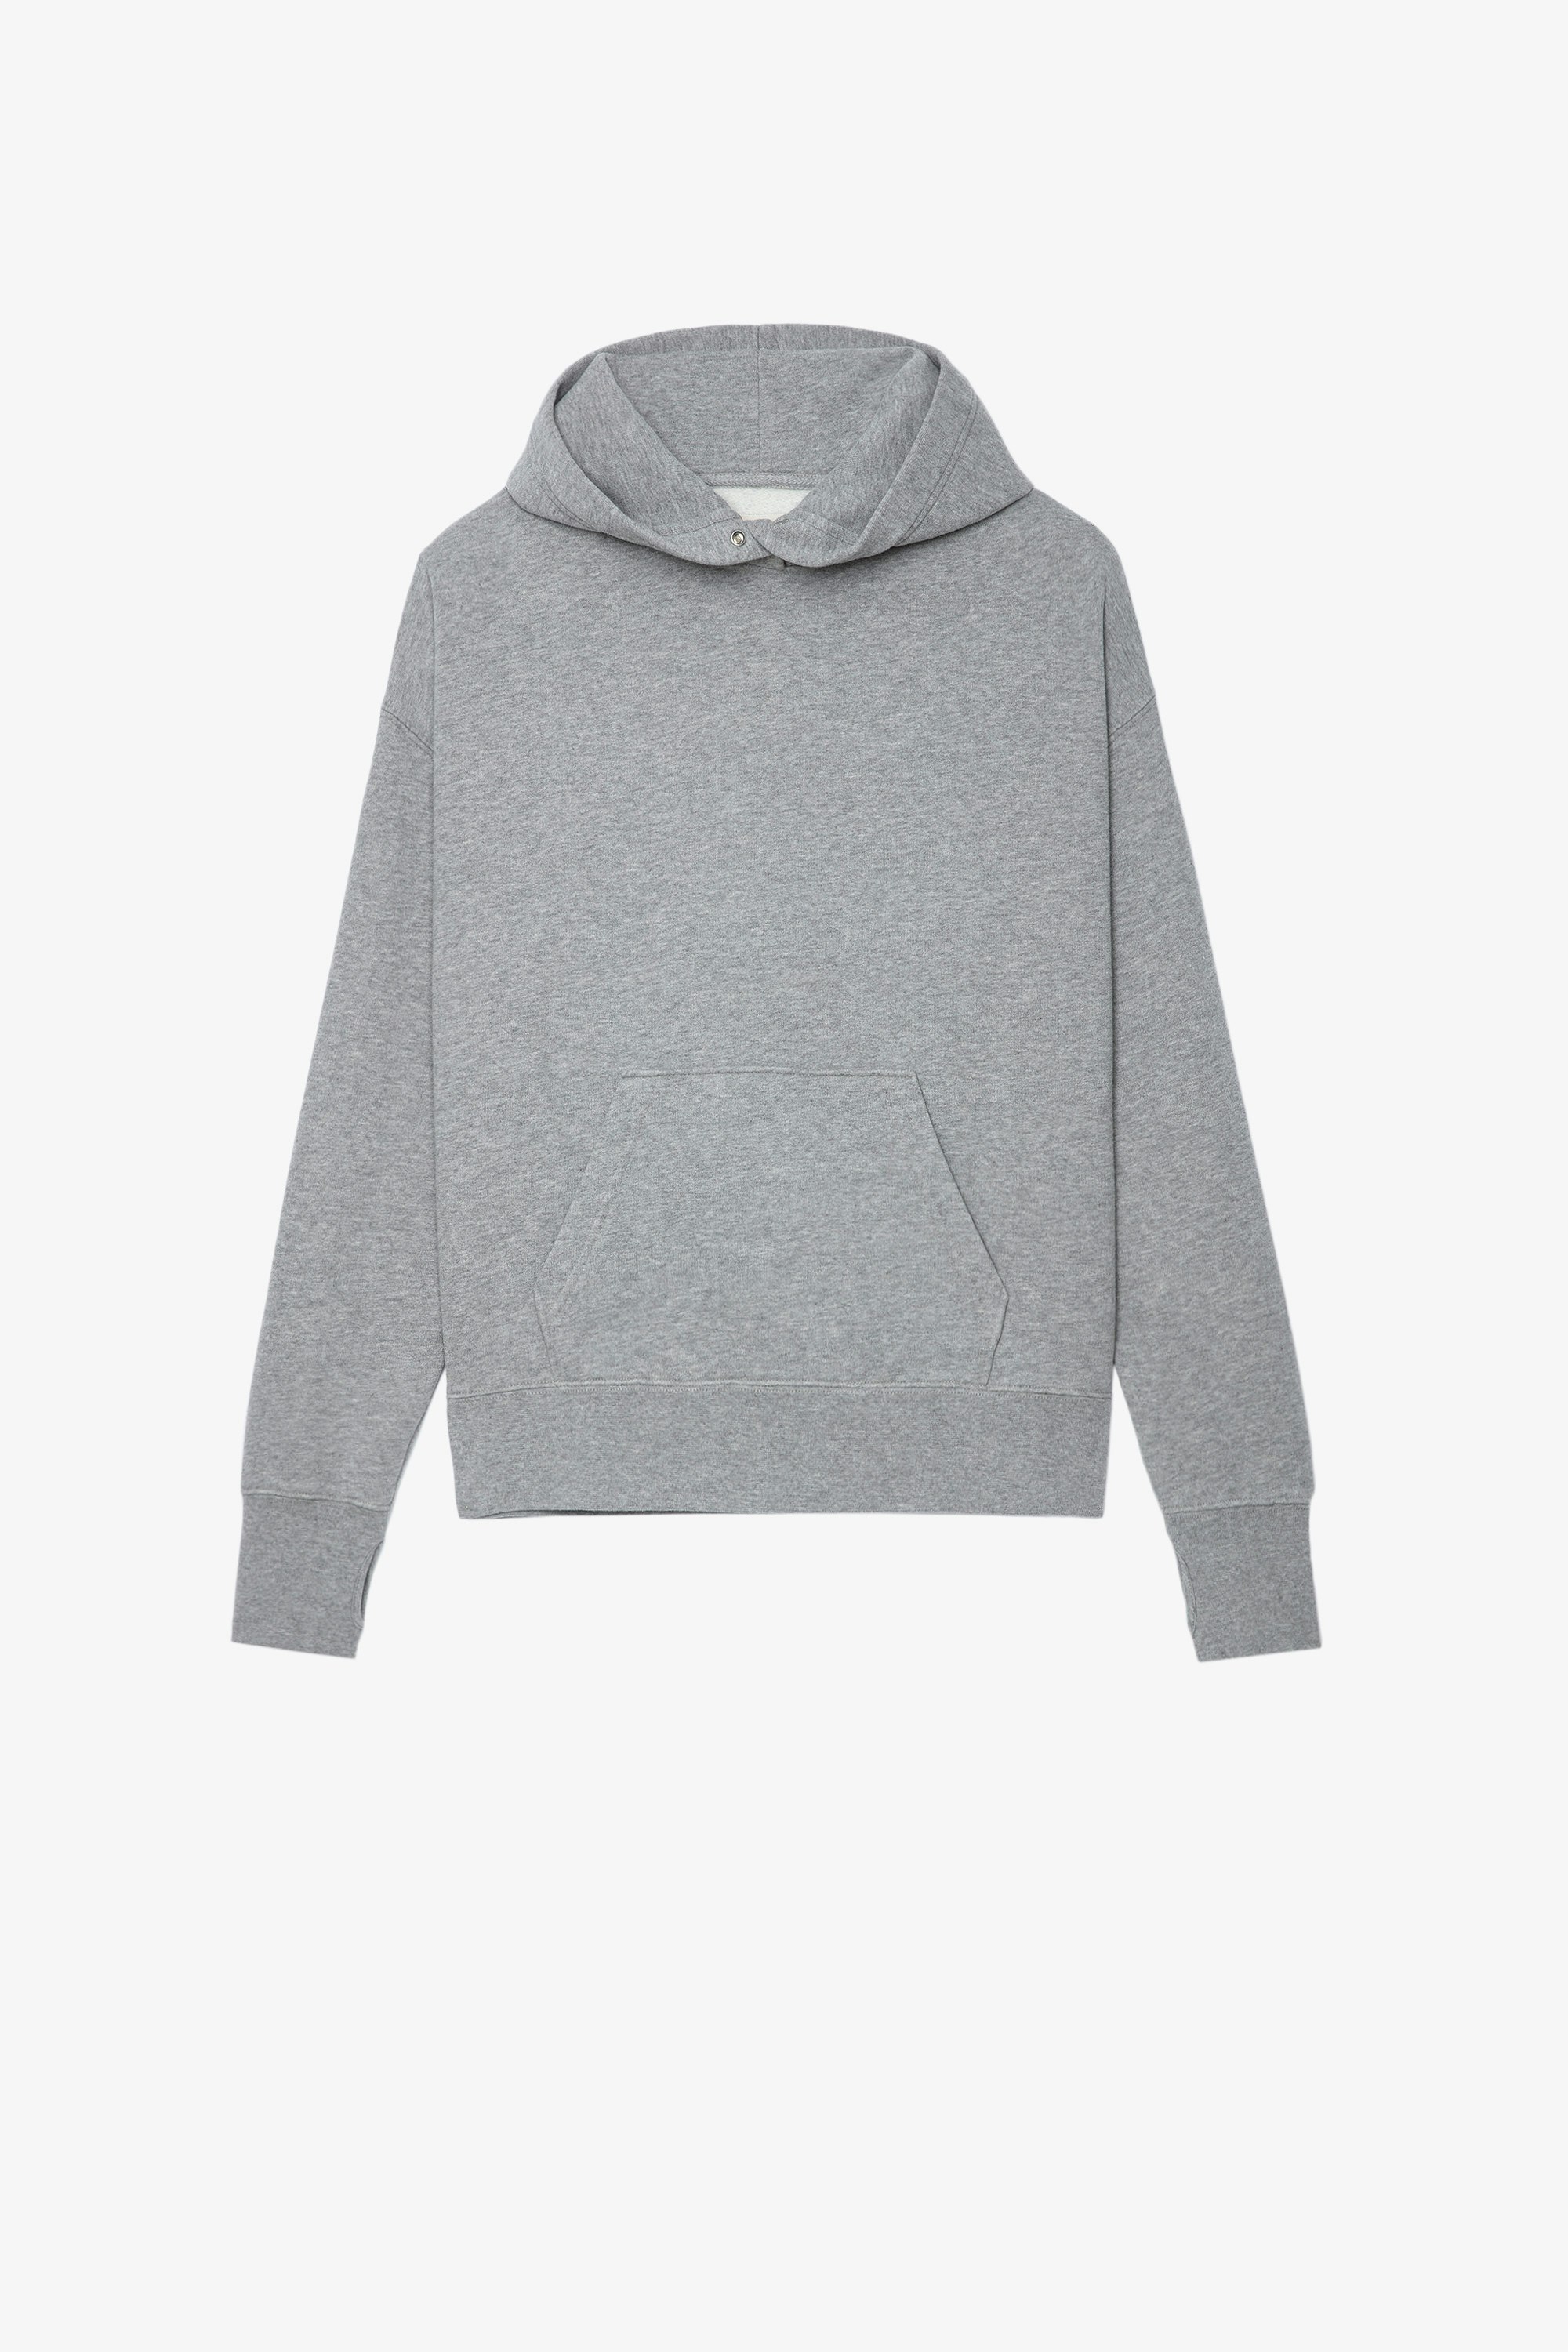 Mia Photoprint Sweatshirt Women’s grey marl hooded sweatshirt with guitar photoprint